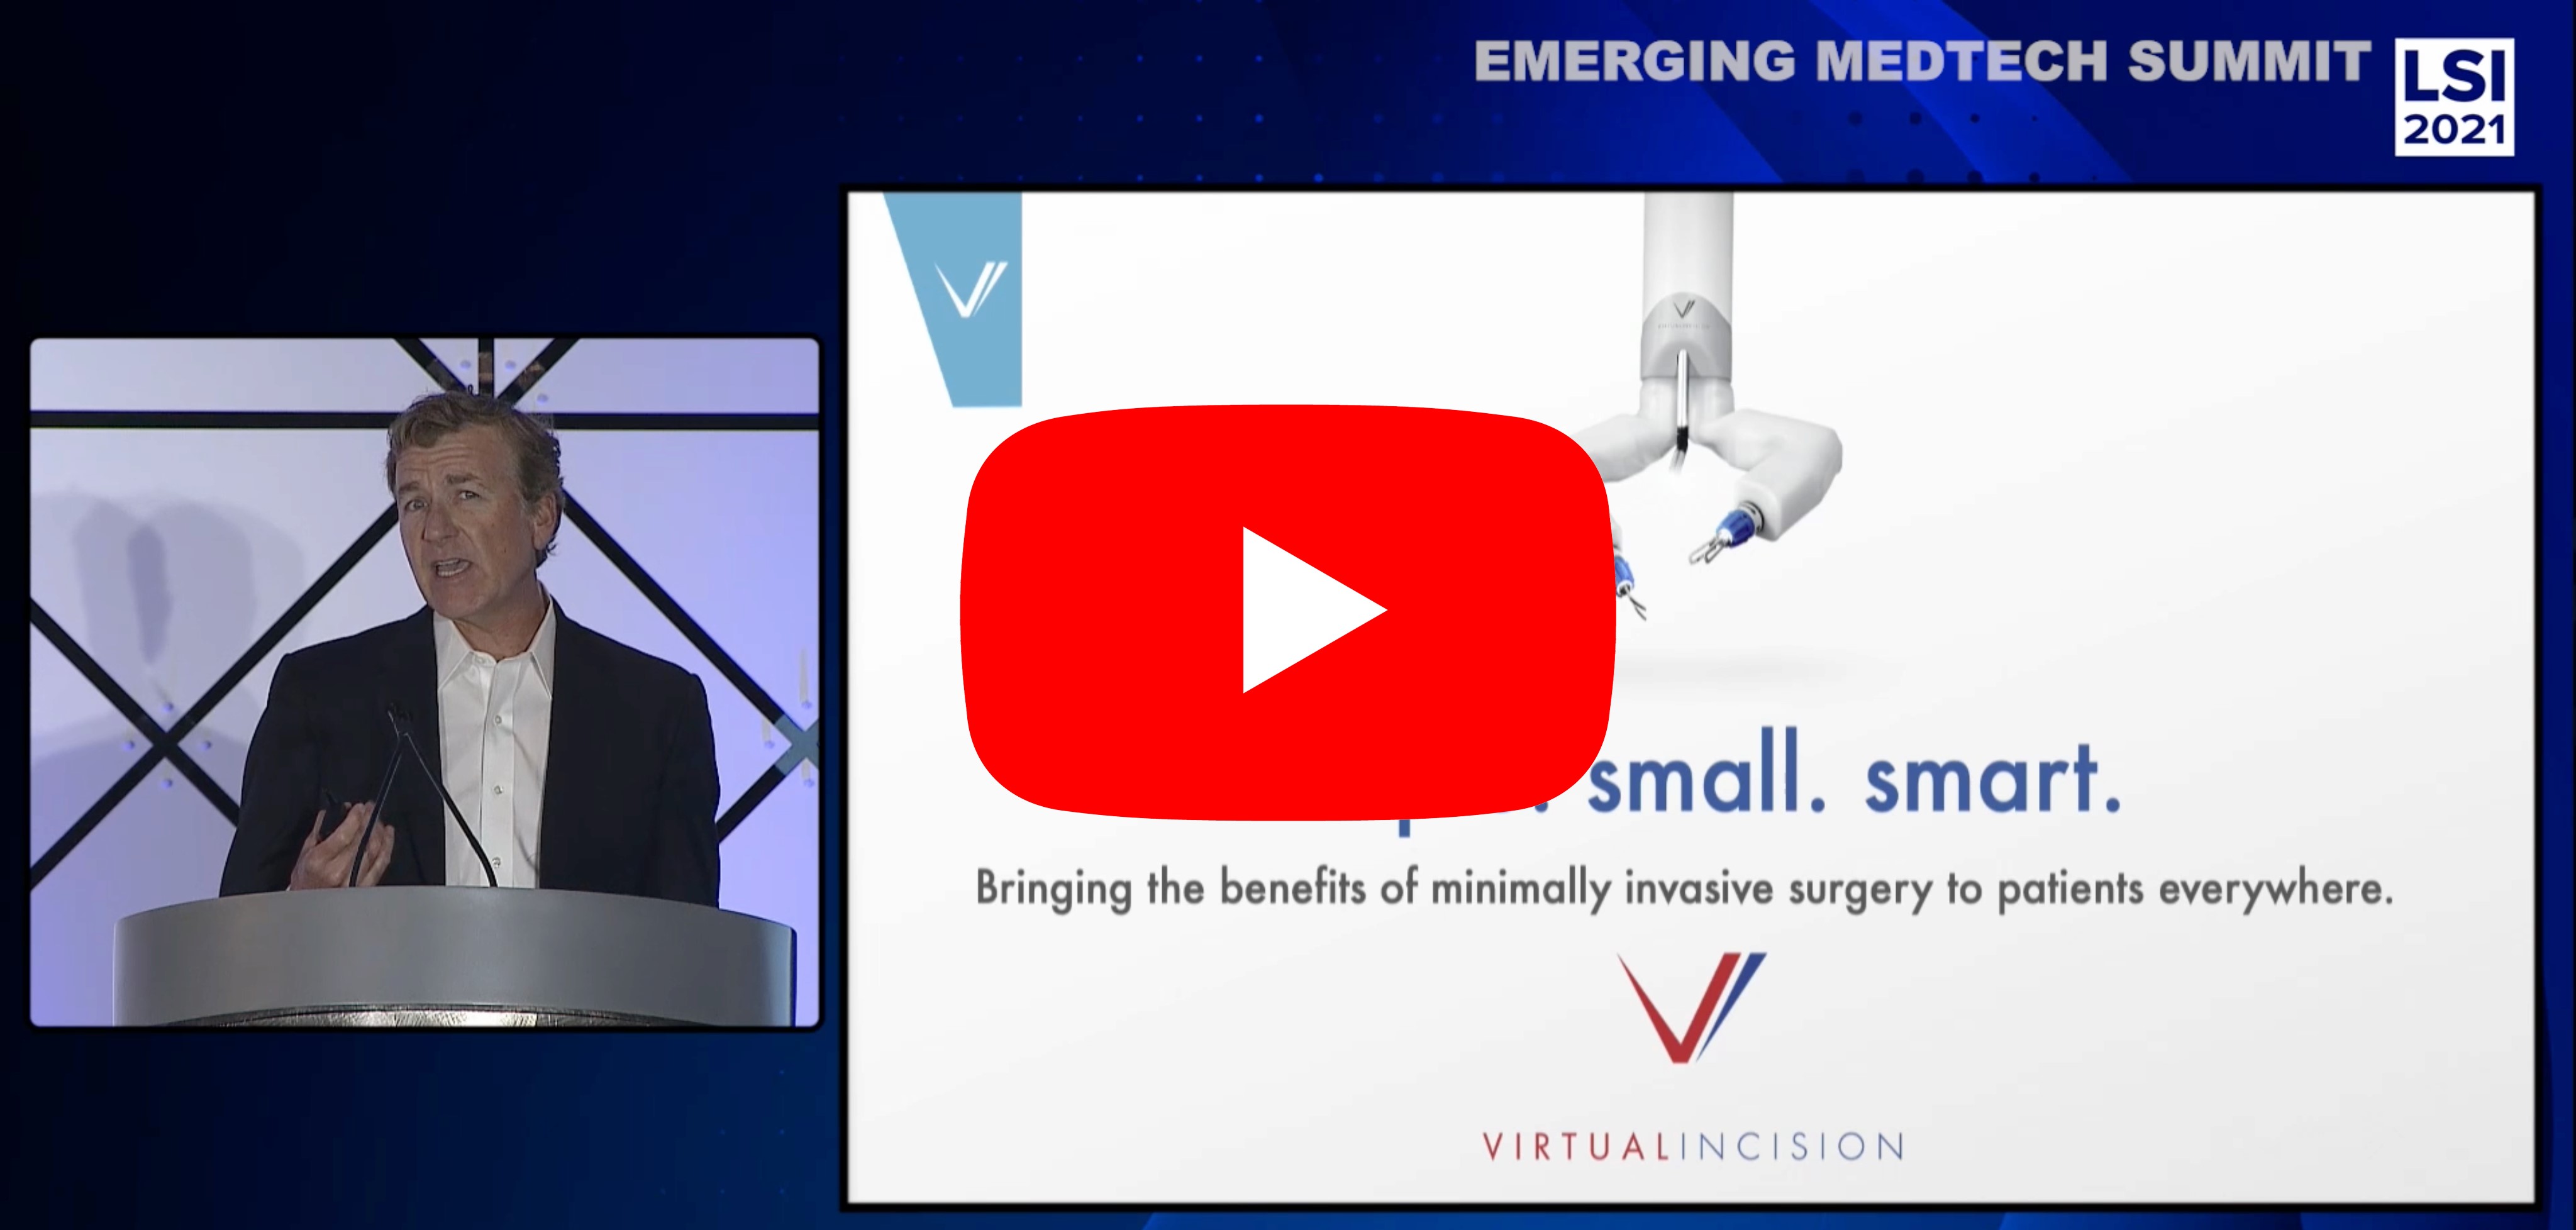 Virtual Incision presentation at LSI2021 Emerging Medtech Summit